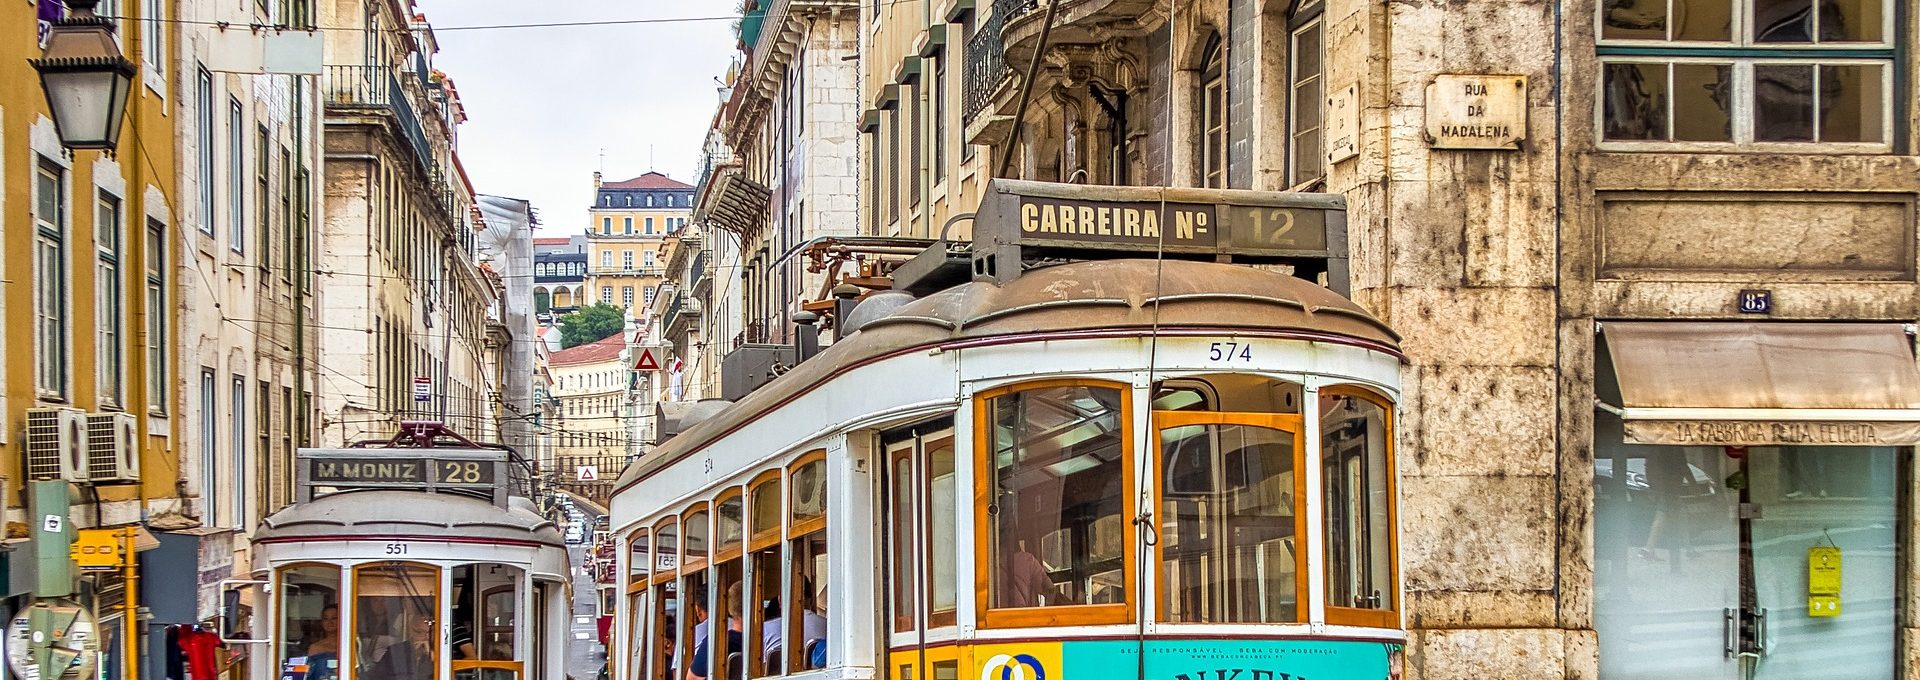 Bondes passam em ruas antigas de Portugal